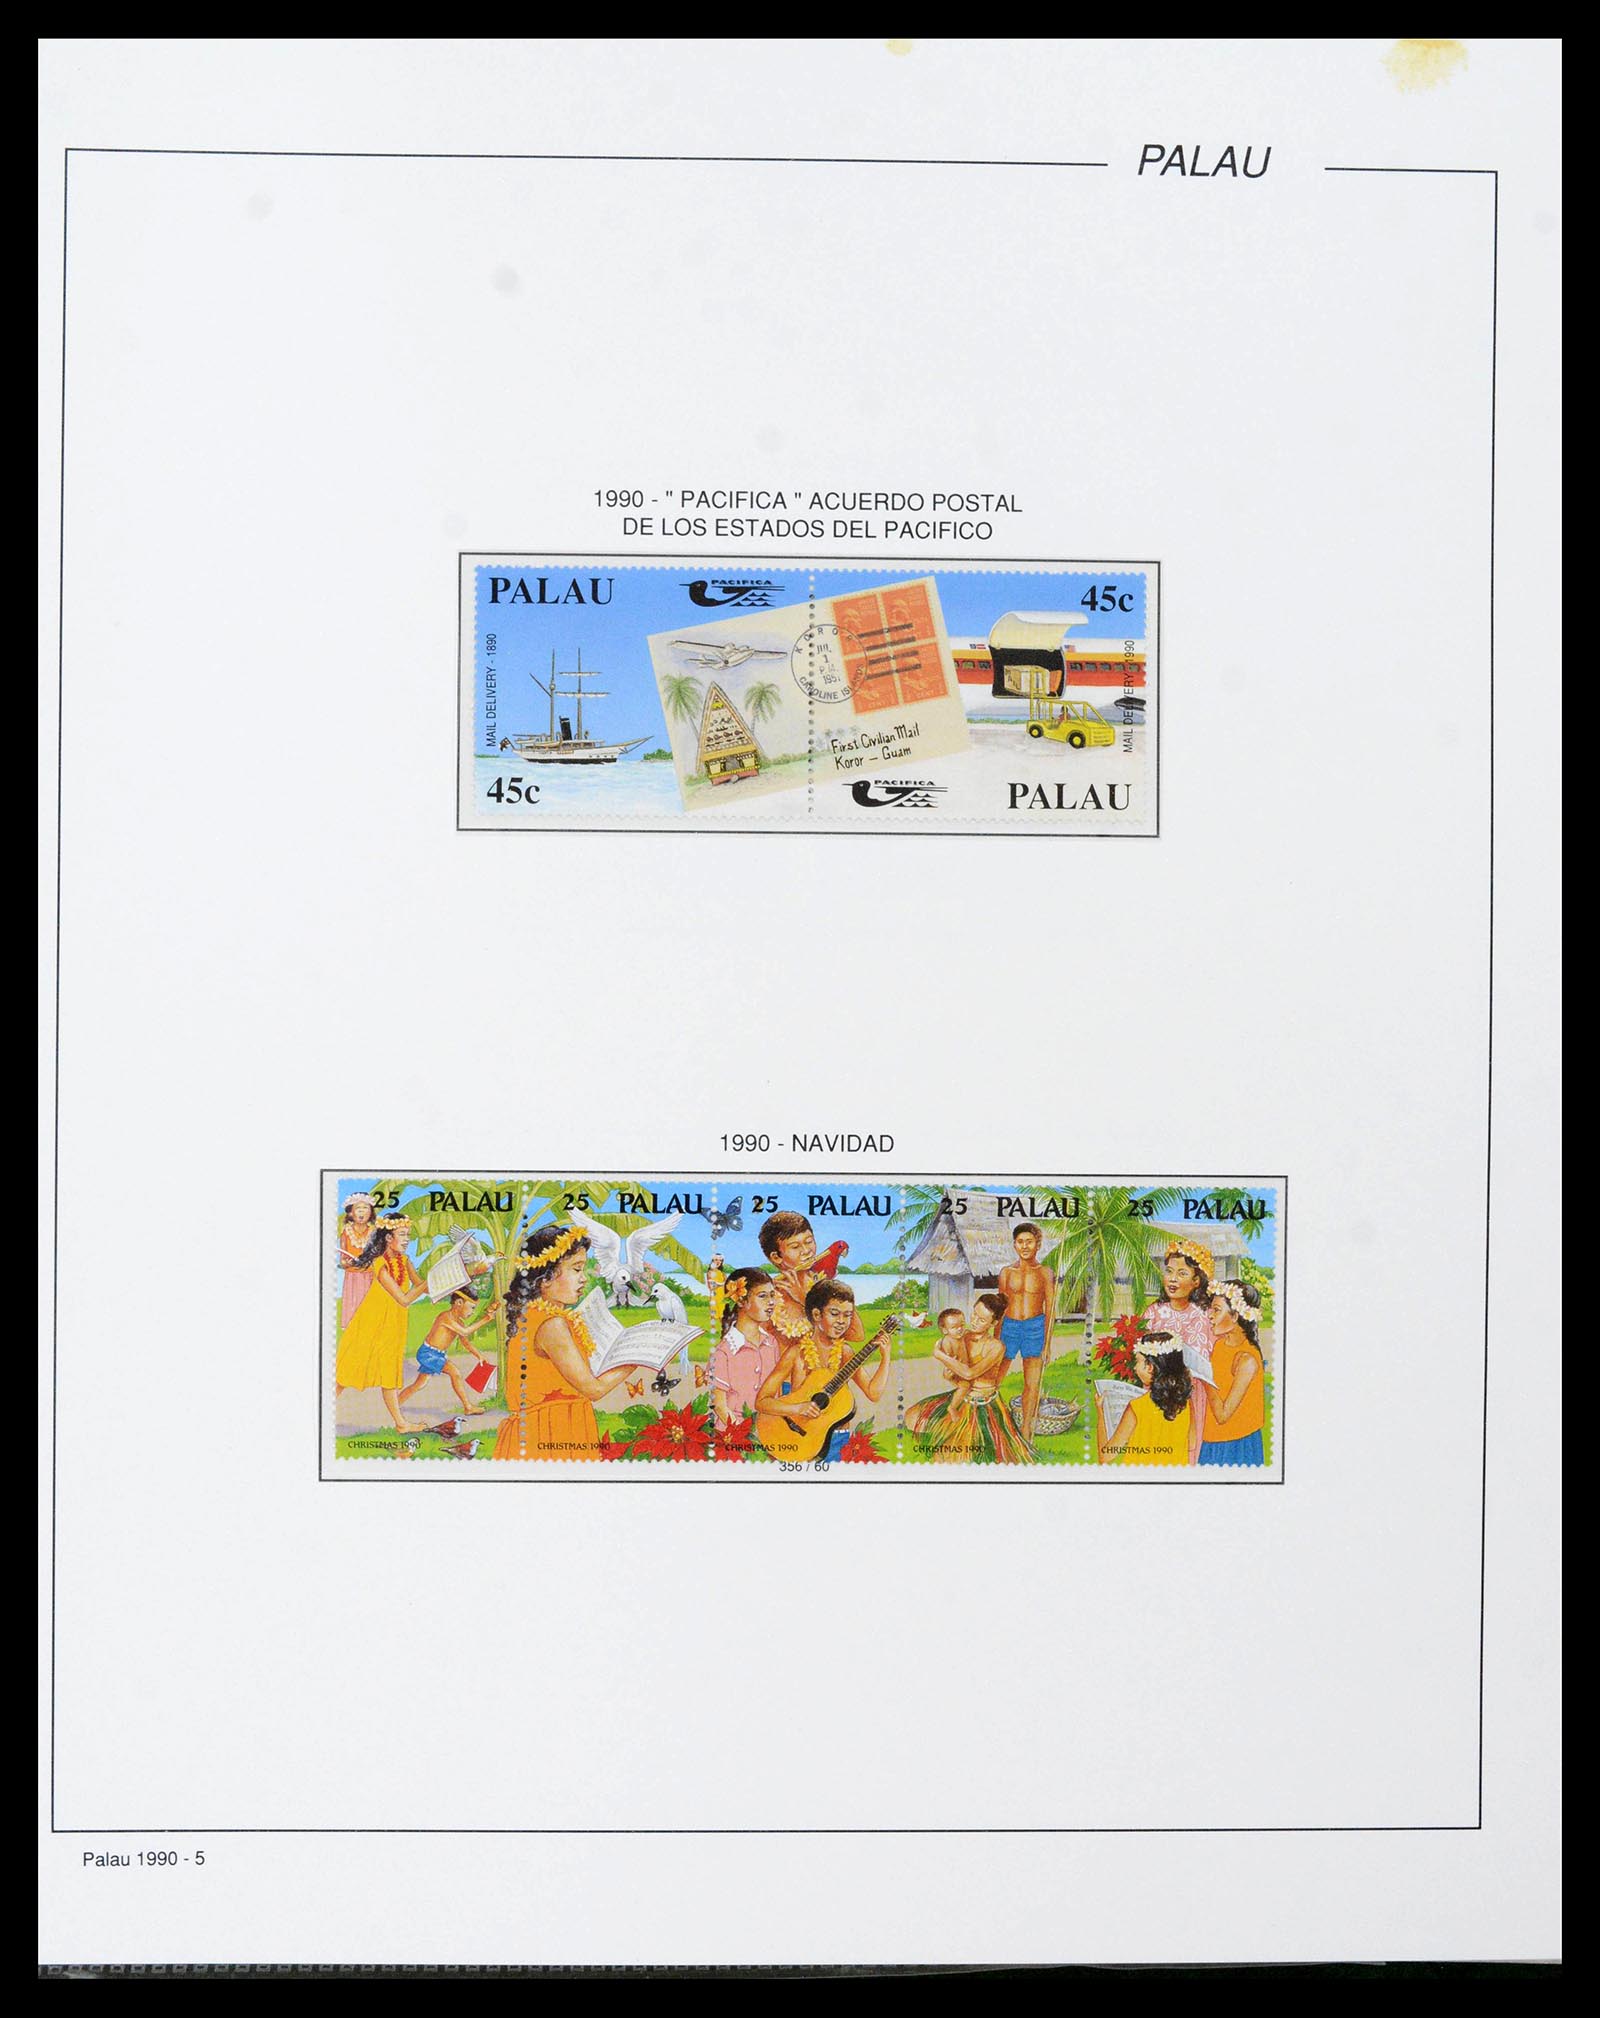 39222 0037 - Stamp collection 39222 Palau, Micronesia and Marshall islands 1980-1995.